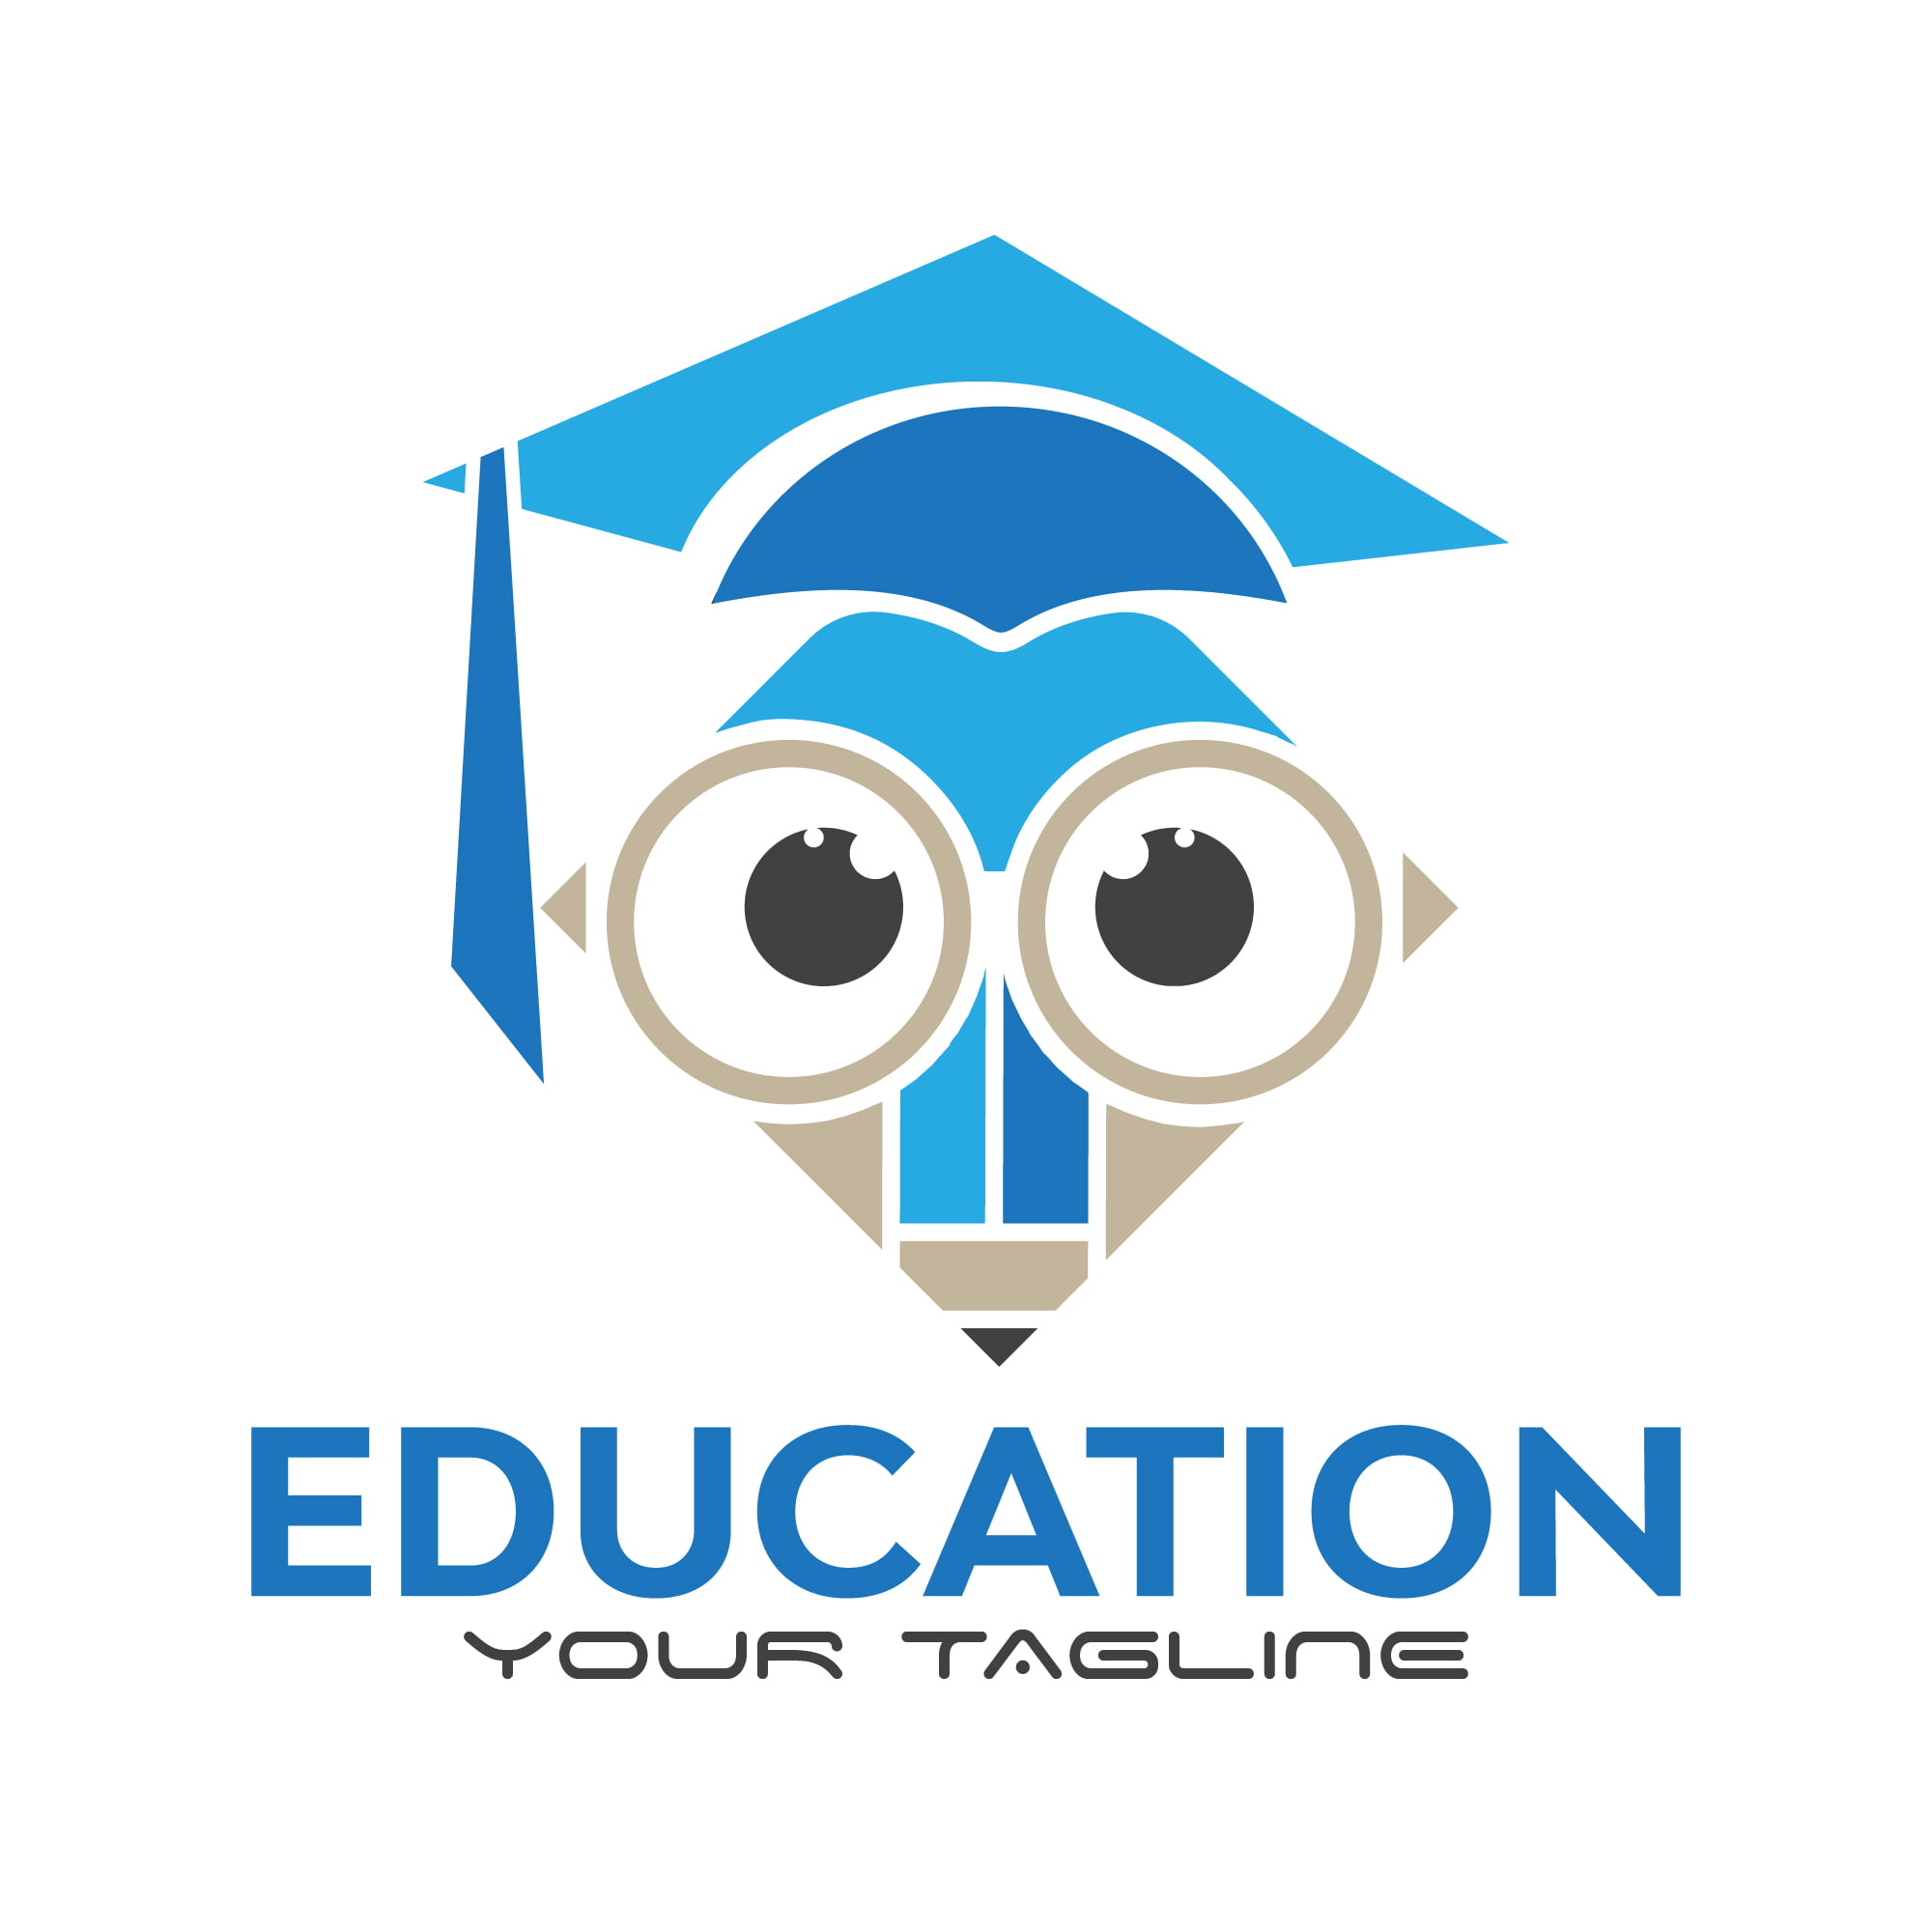 Institute and Education Logo JPEG